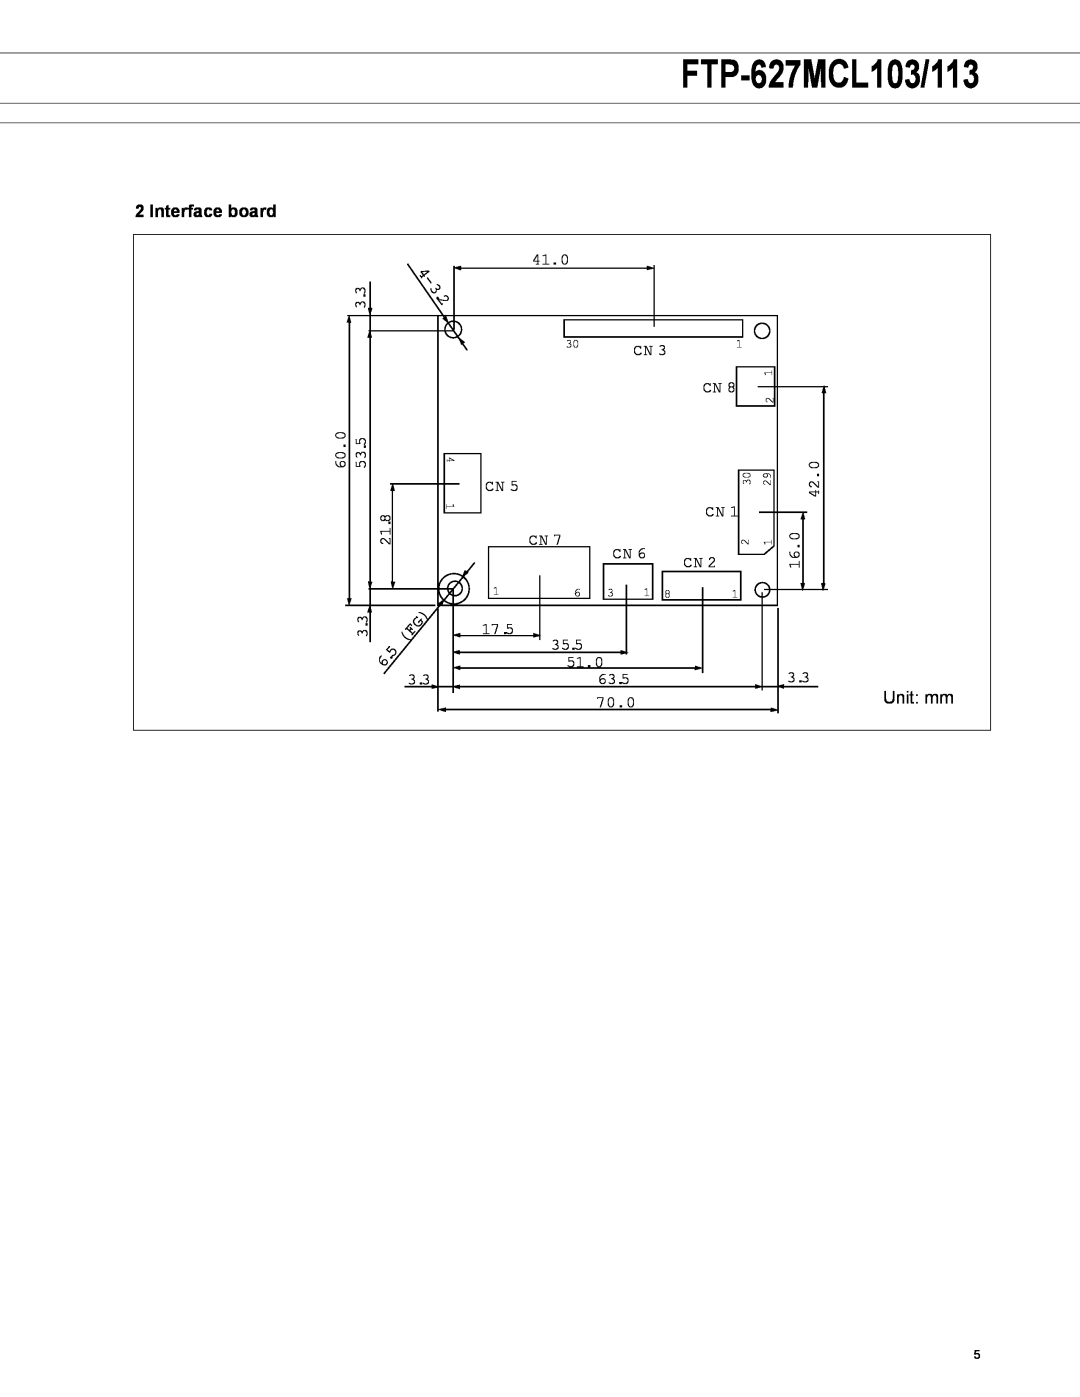 Fujitsu FTP-627MCL113 manual Interface board, FTP-627MCL103/113, 4 - 3 